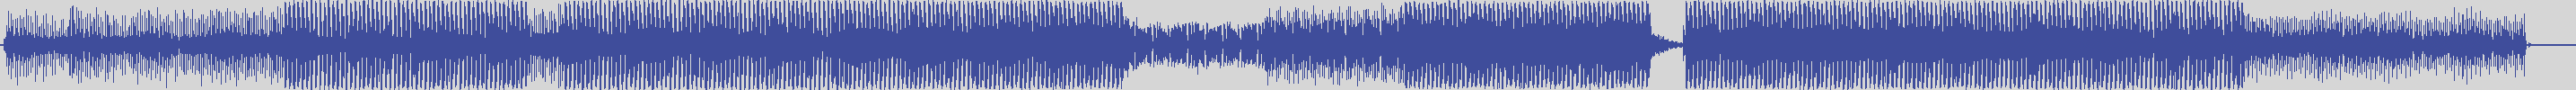 nf_boyz_records [NFY049] Harmonic Way - Deep Solution [Grand Piano Mix] audio wave form